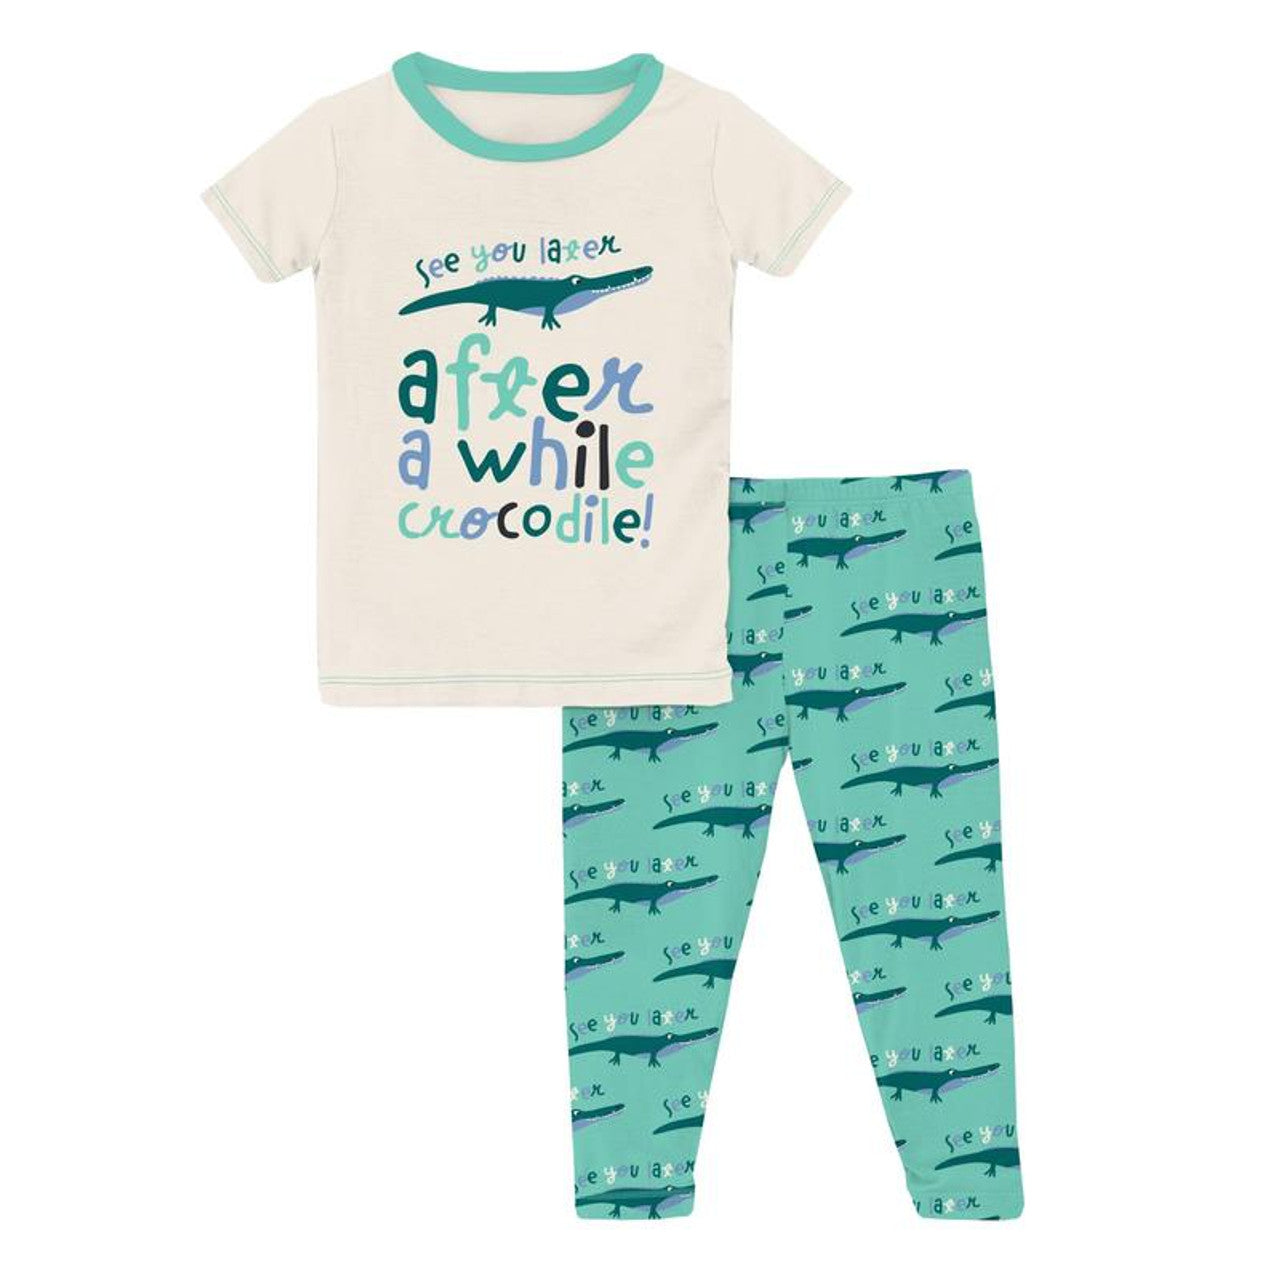 Kickee Pants Print Short Sleeve Pajama Set + More Options